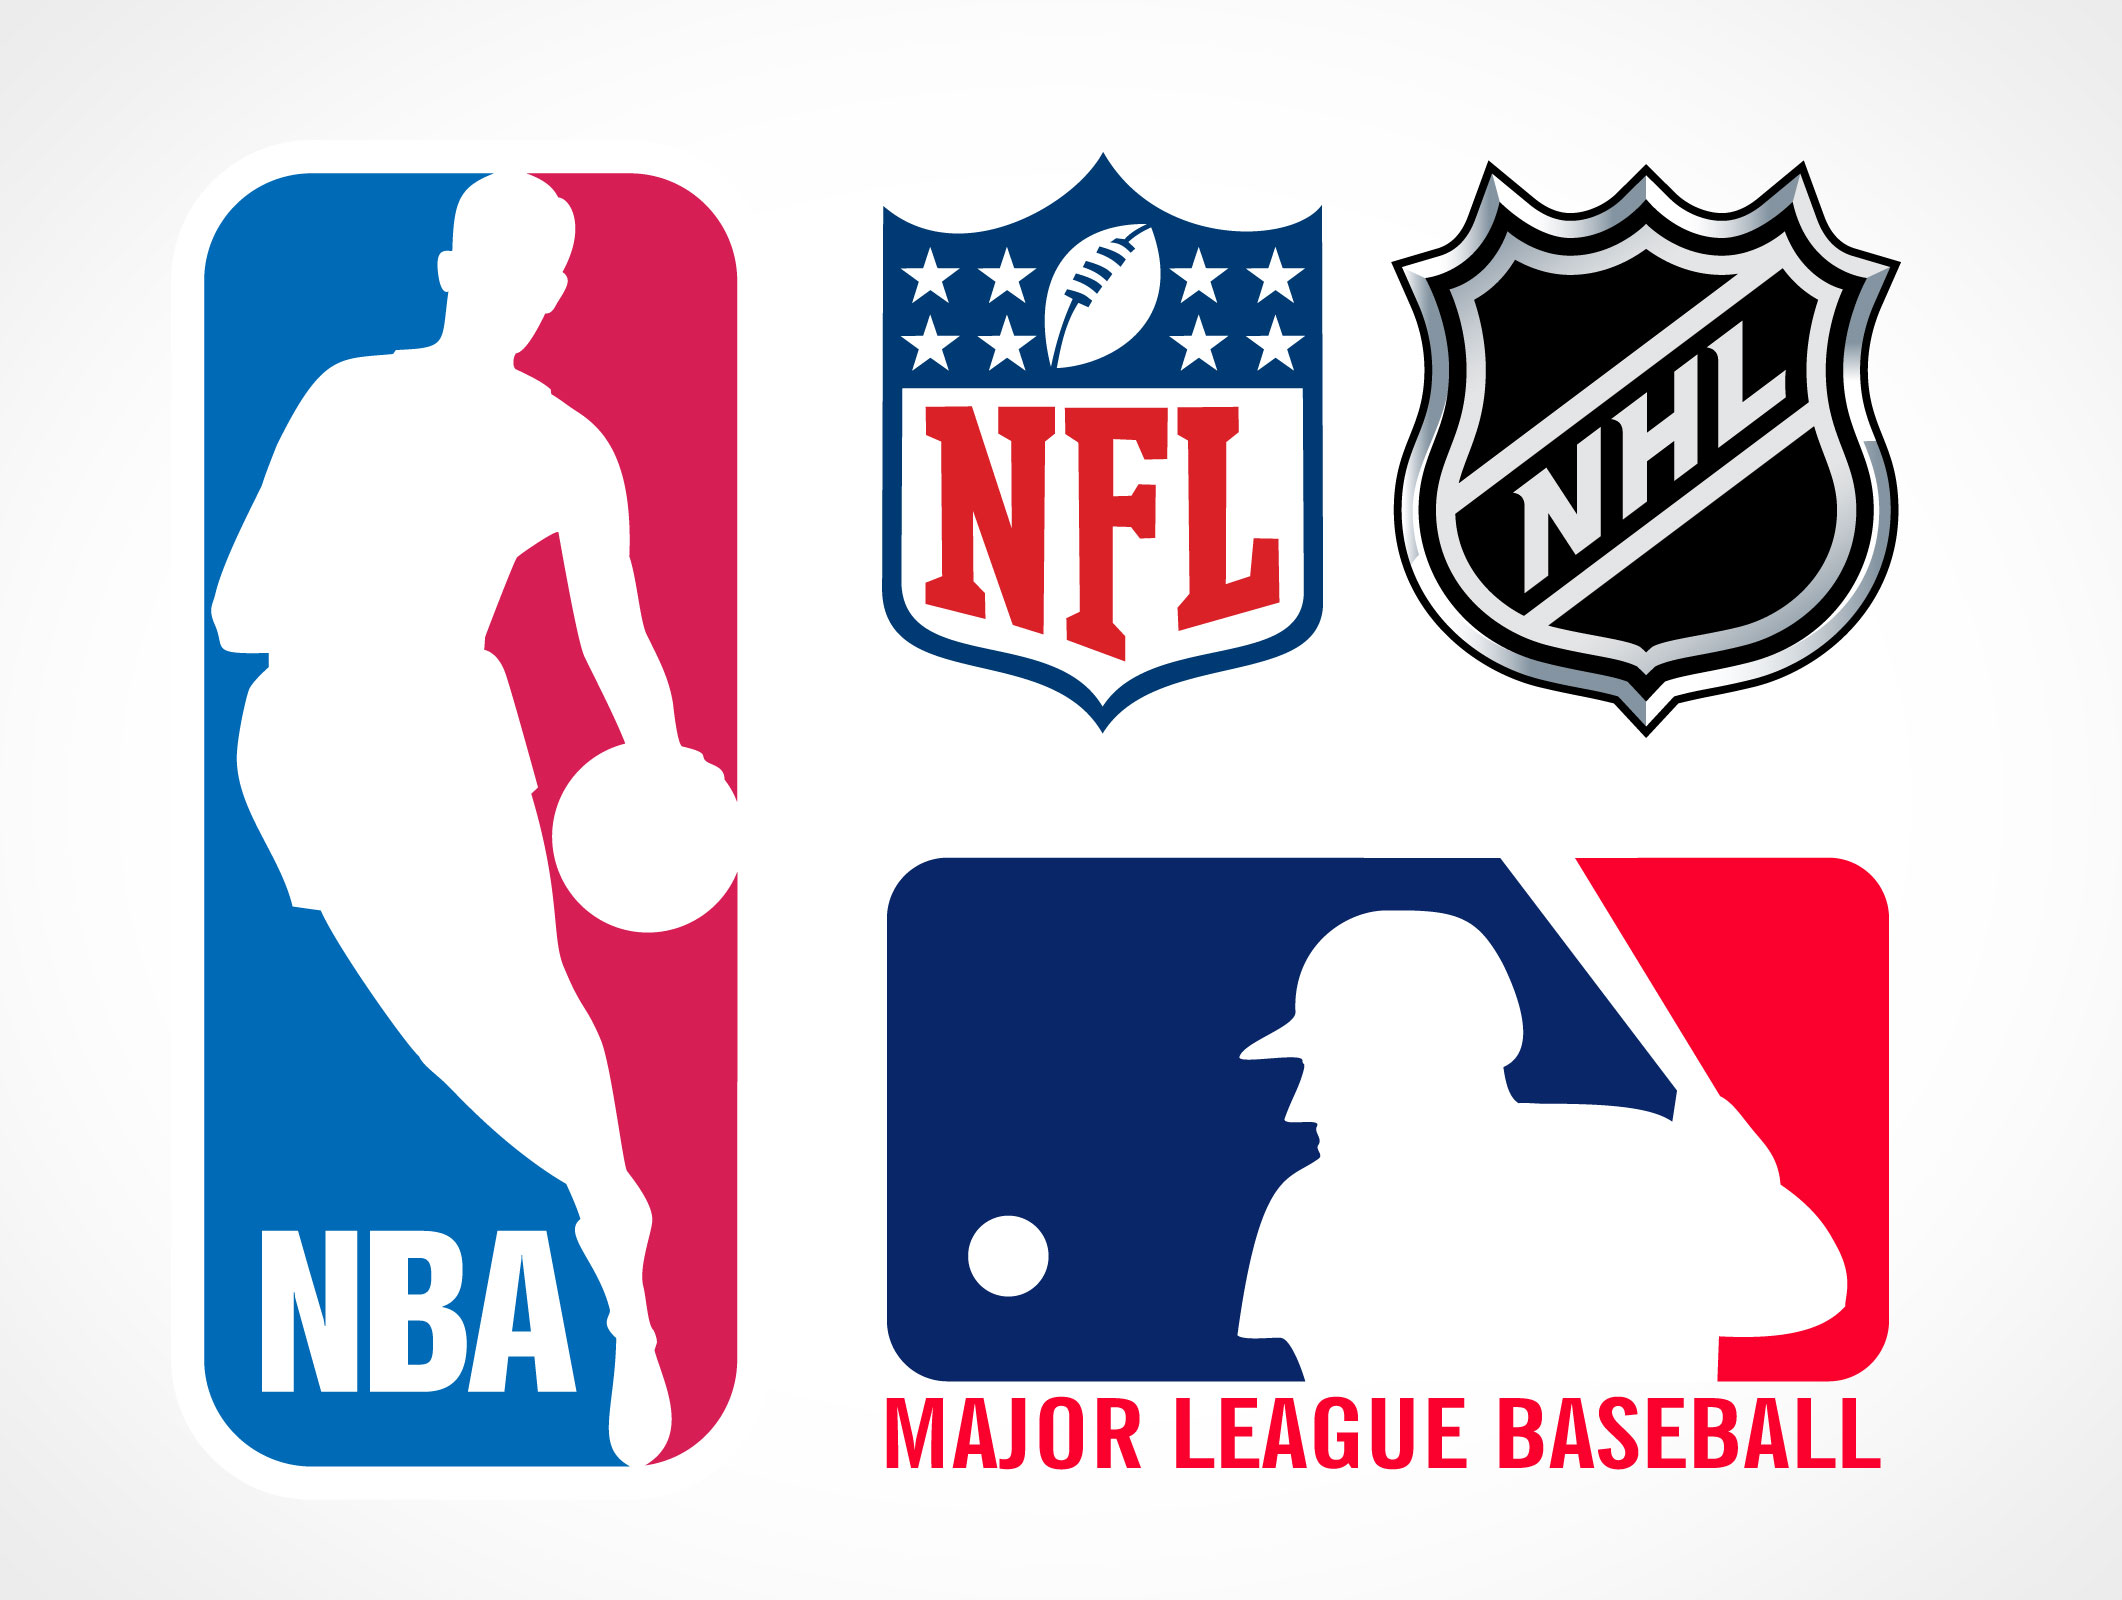 Dallas Stars Logo SVG - Free Sports Logo Downloads